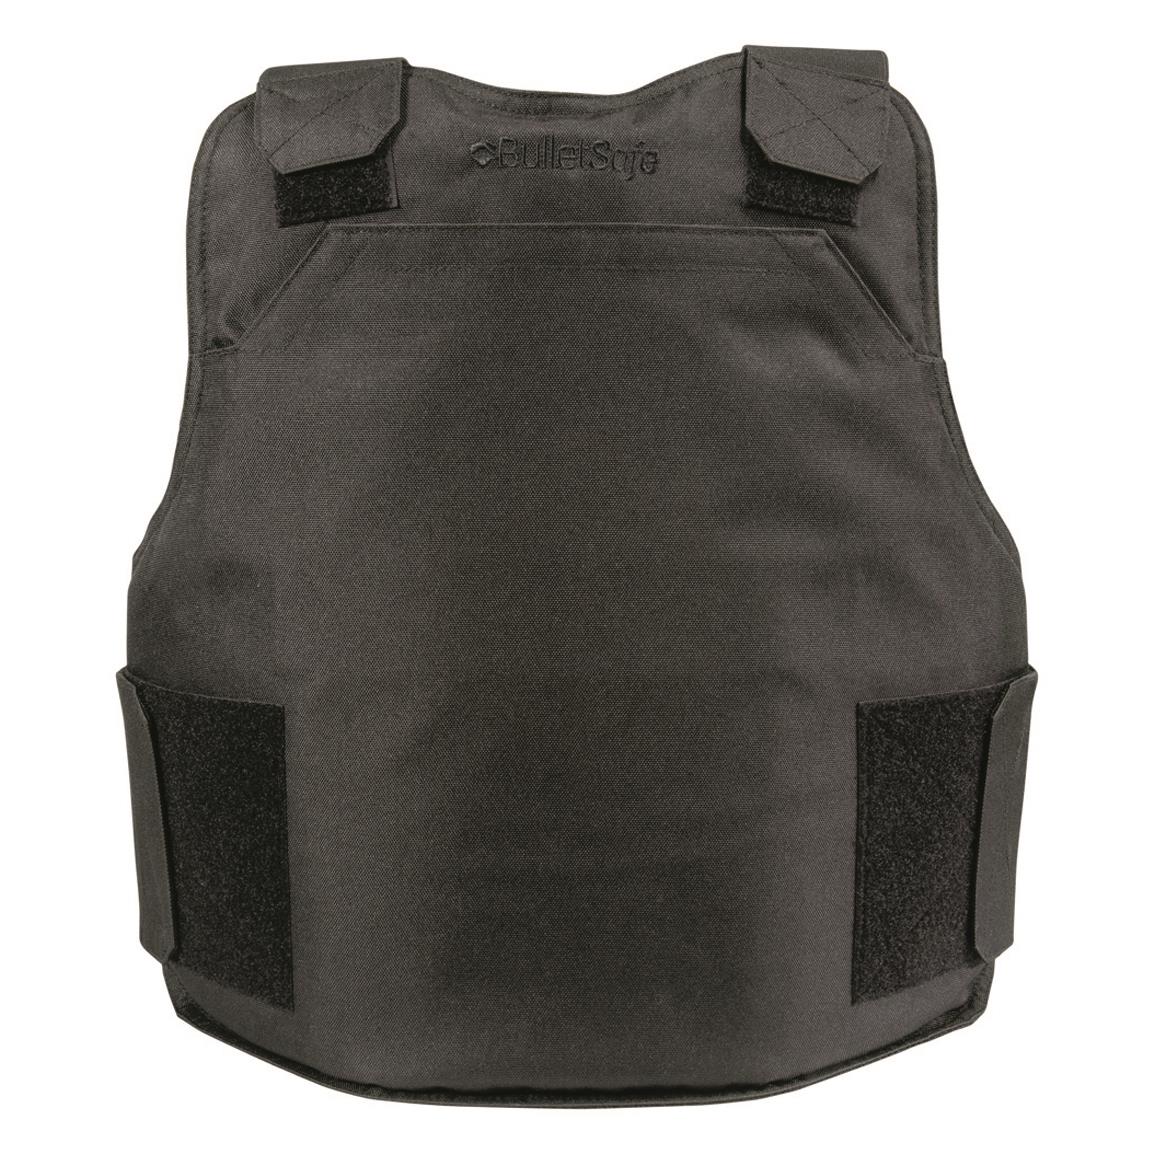 Premier Body Armor Discreet Executive Vest - Level IIIA Black Small